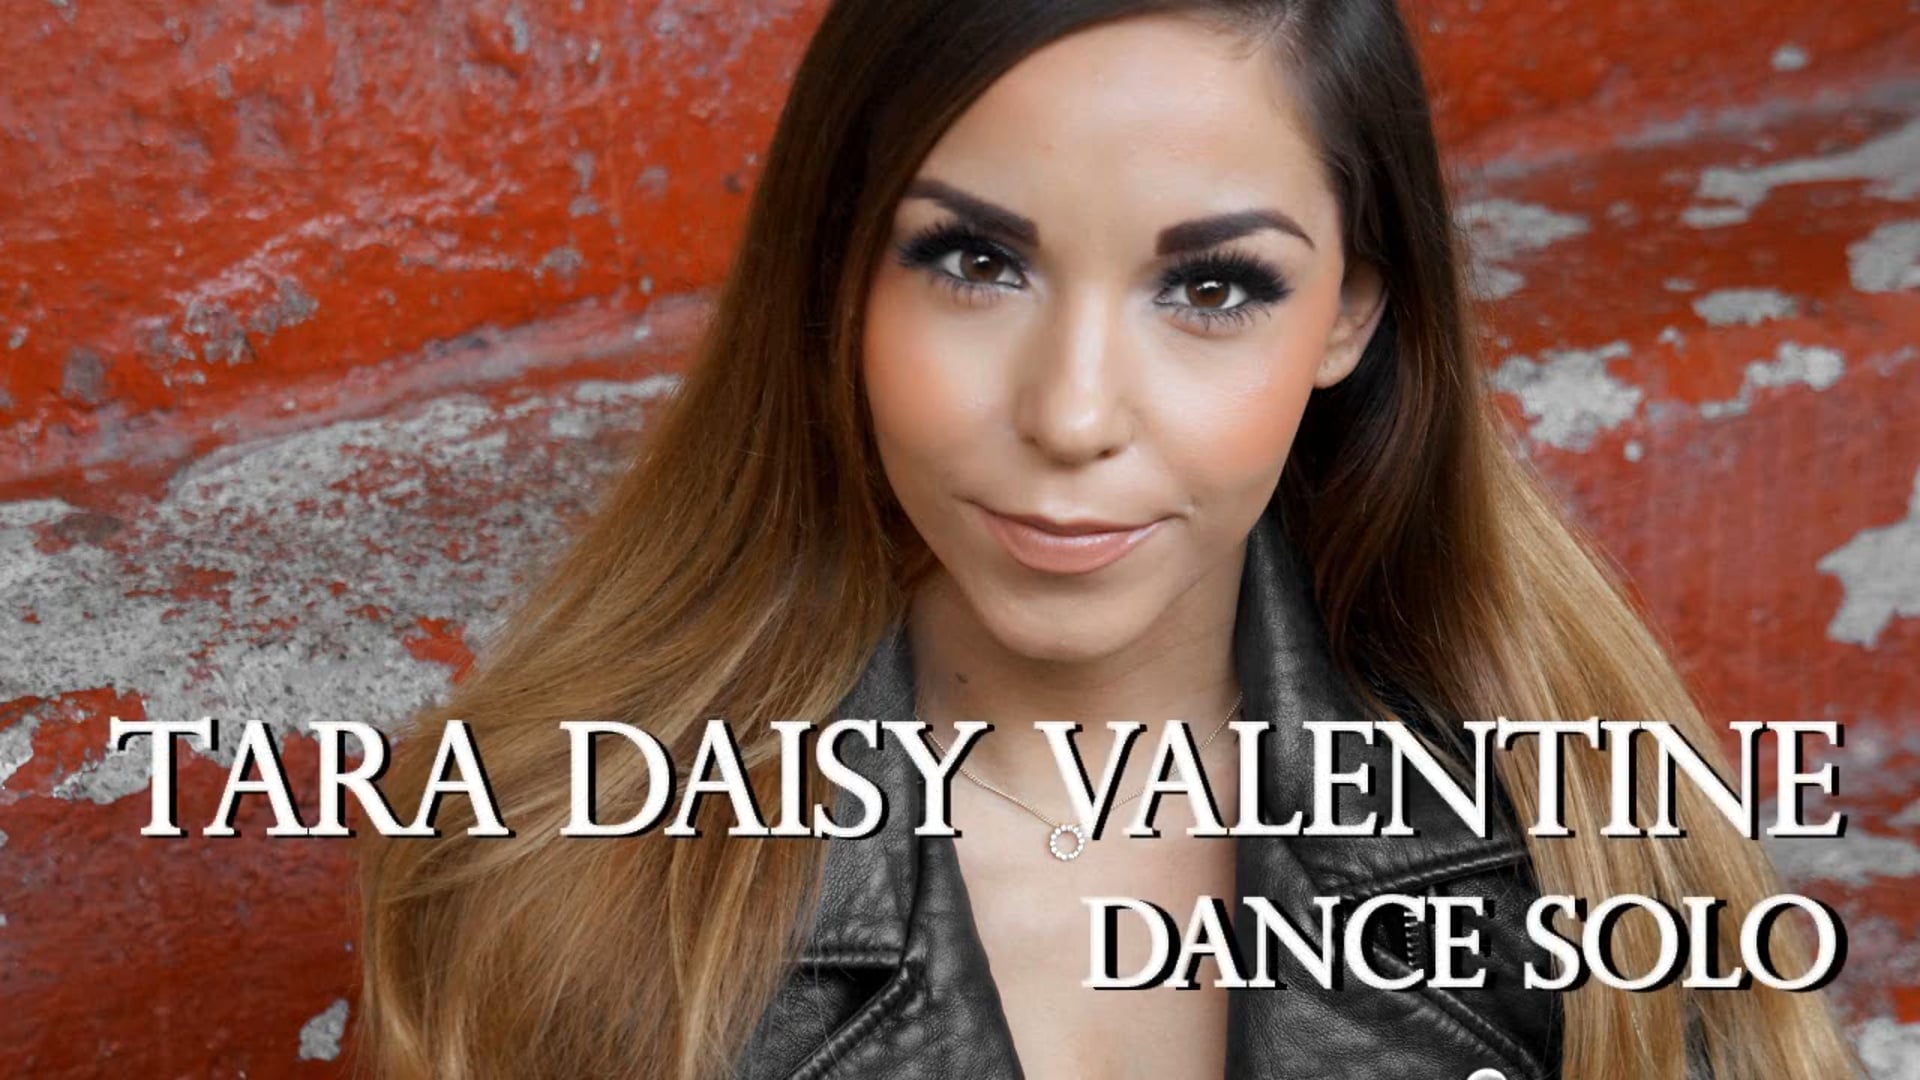 Tara Daisy Valentine Dance Solo produced by  ©MOSSYMEDIA